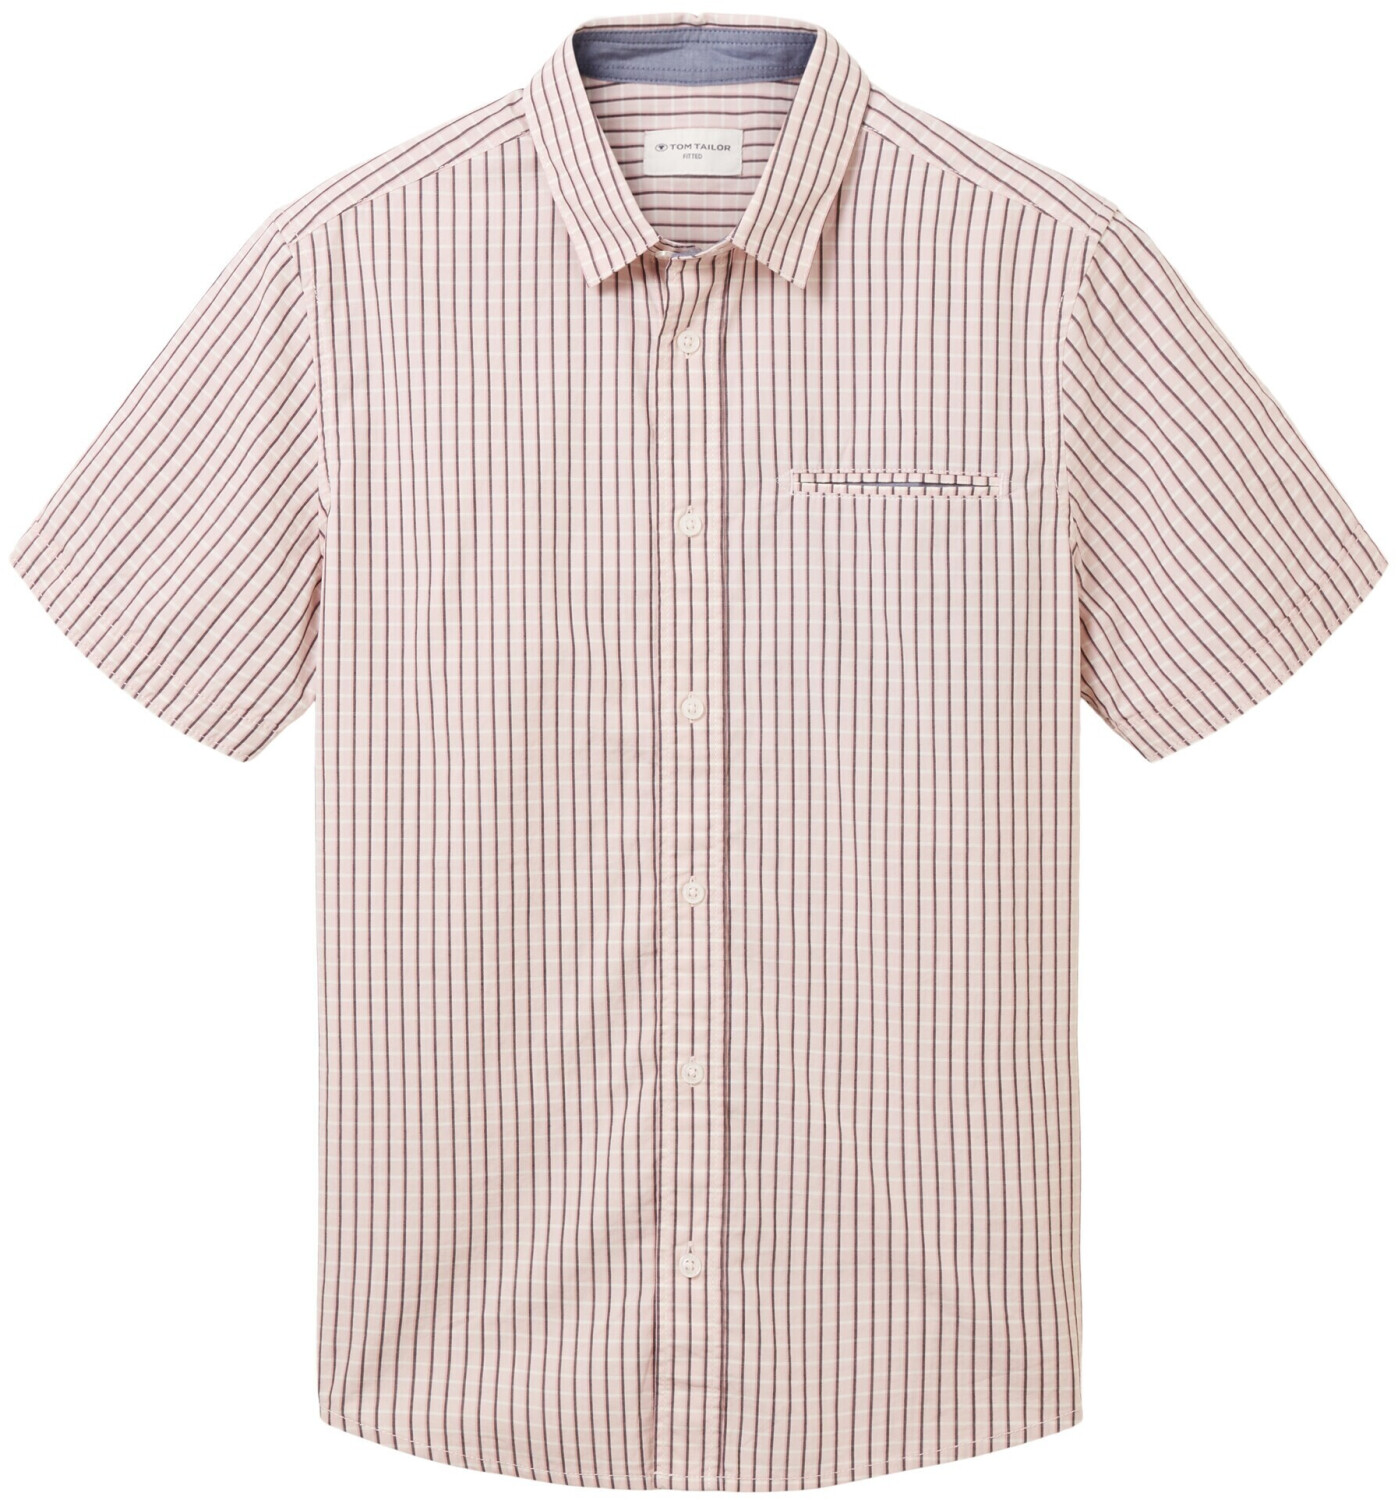 Tom Tailor Kurzarmhemd kariert (1036223-31806) pink off white navy check ab  11,90 € | Preisvergleich bei